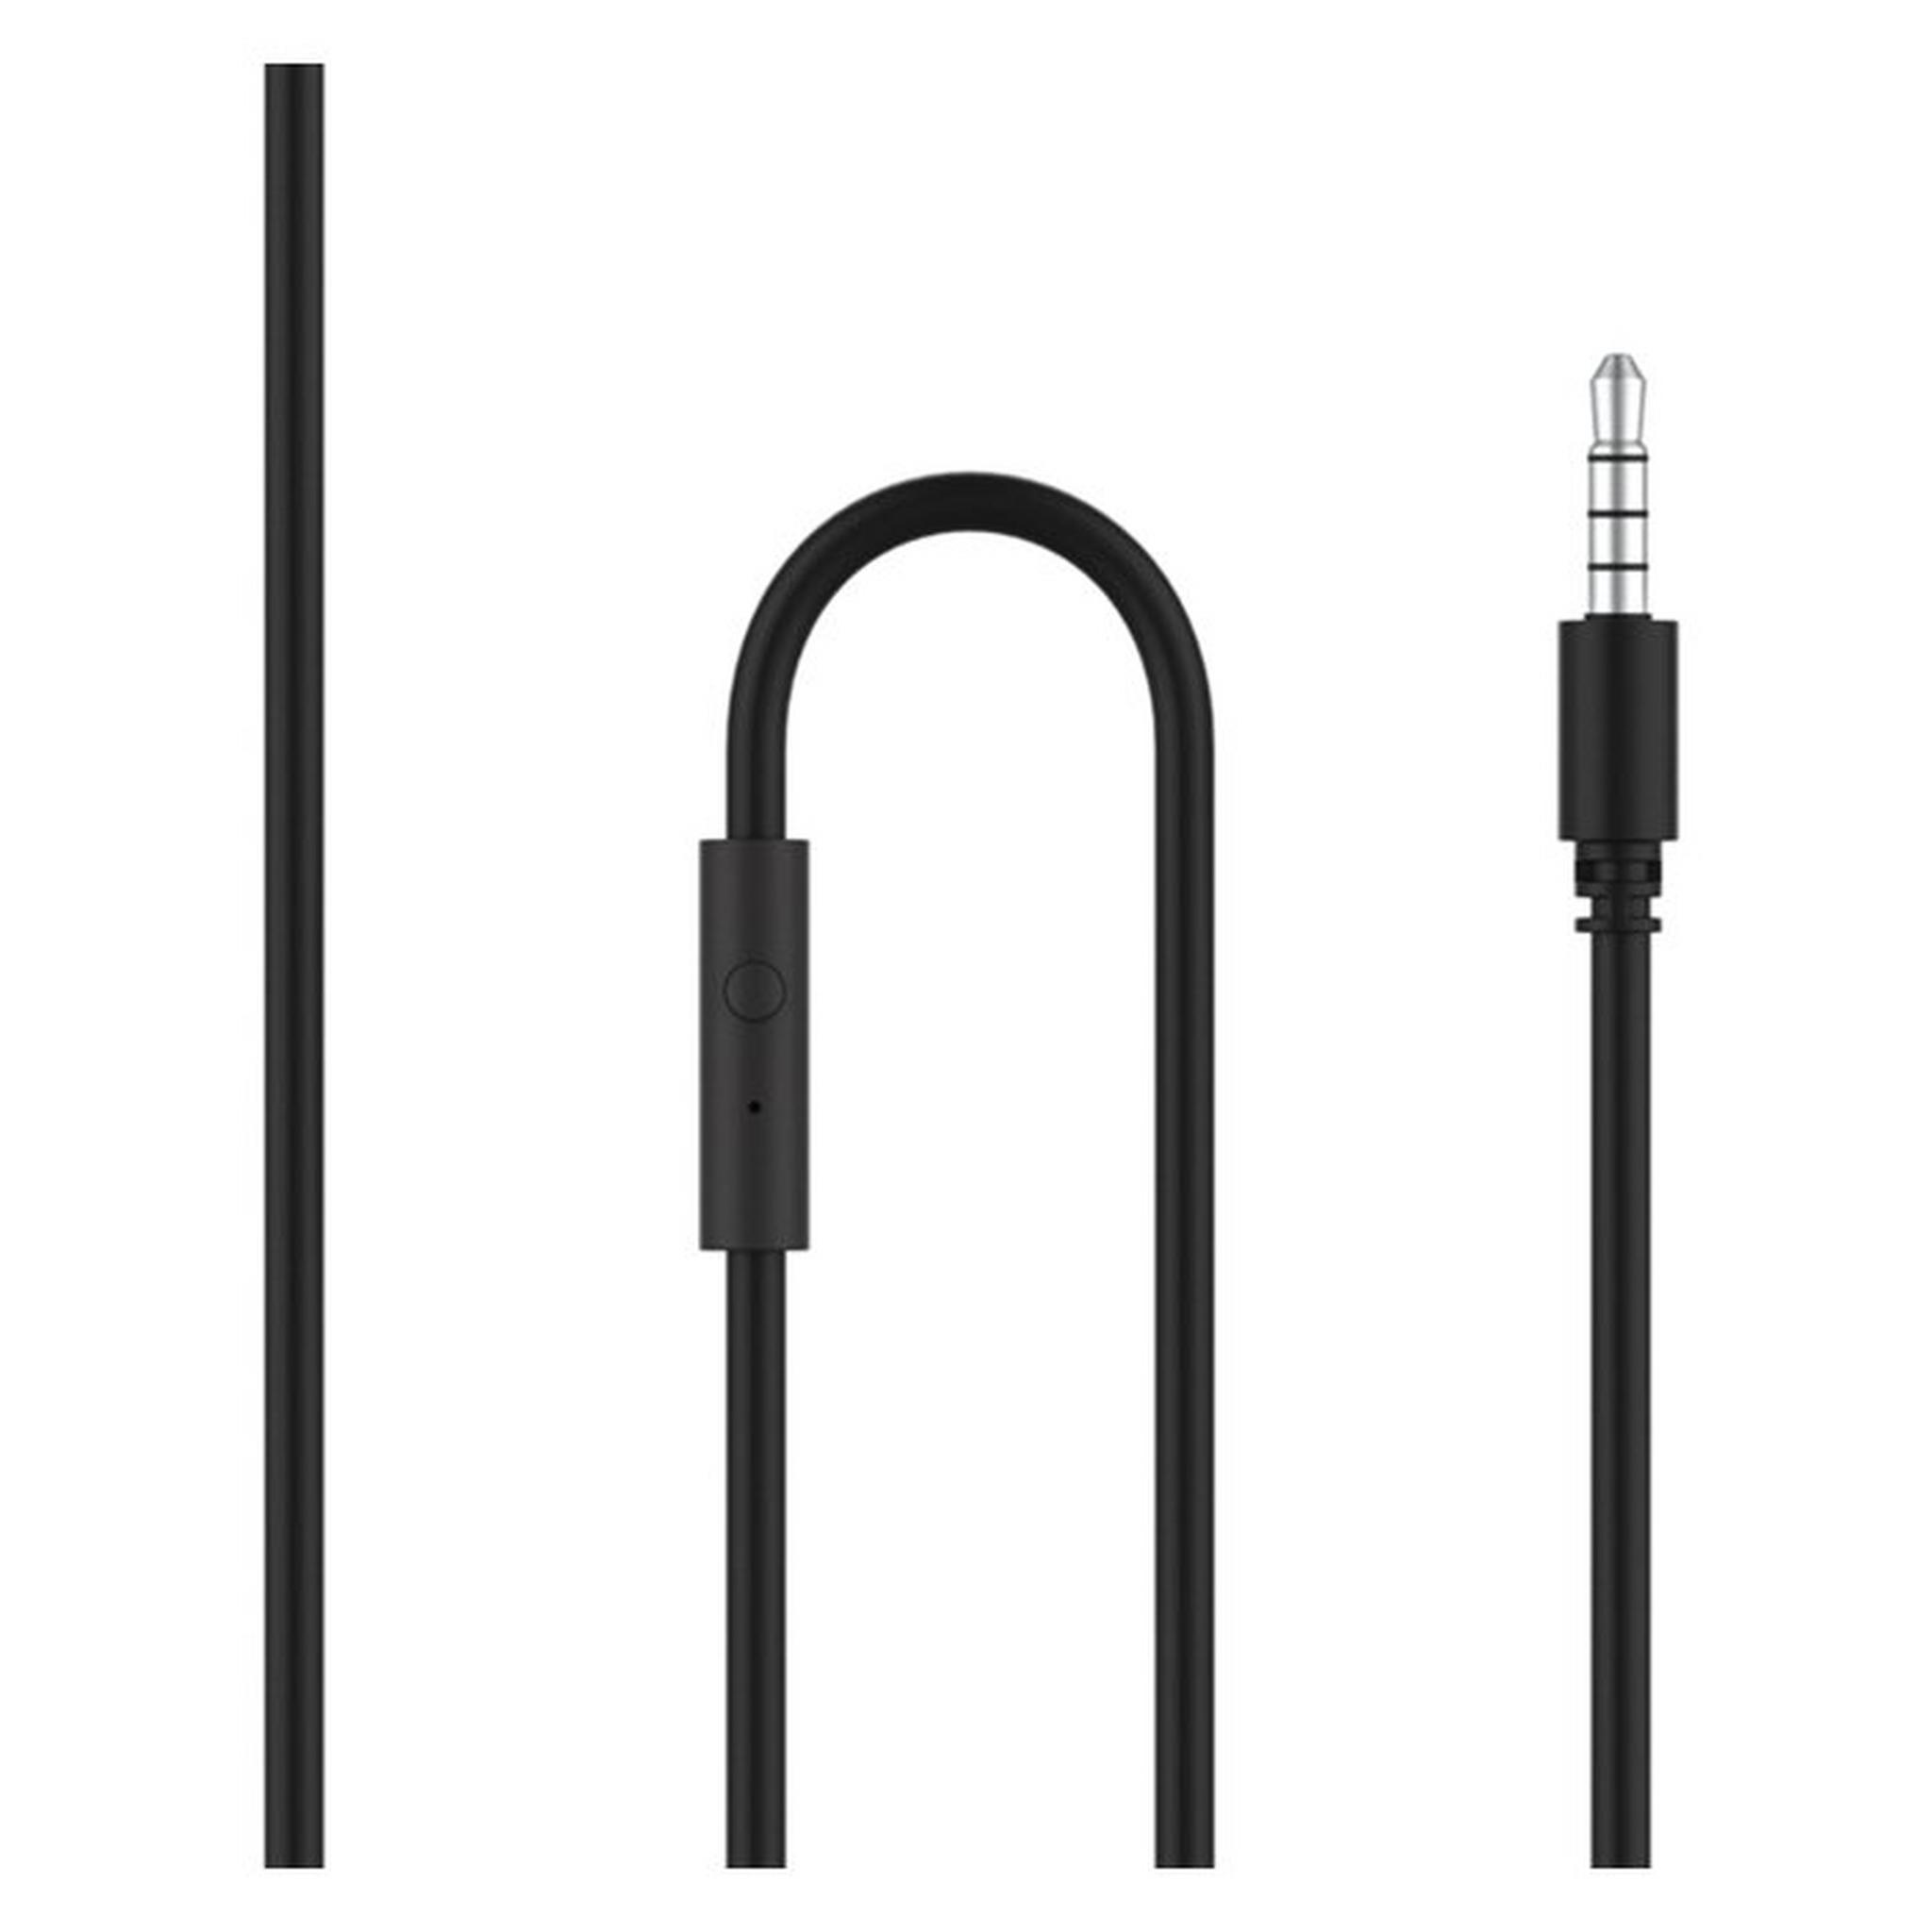 Belkin Soundform mini kids wired headphones, AUD004btBK - Black